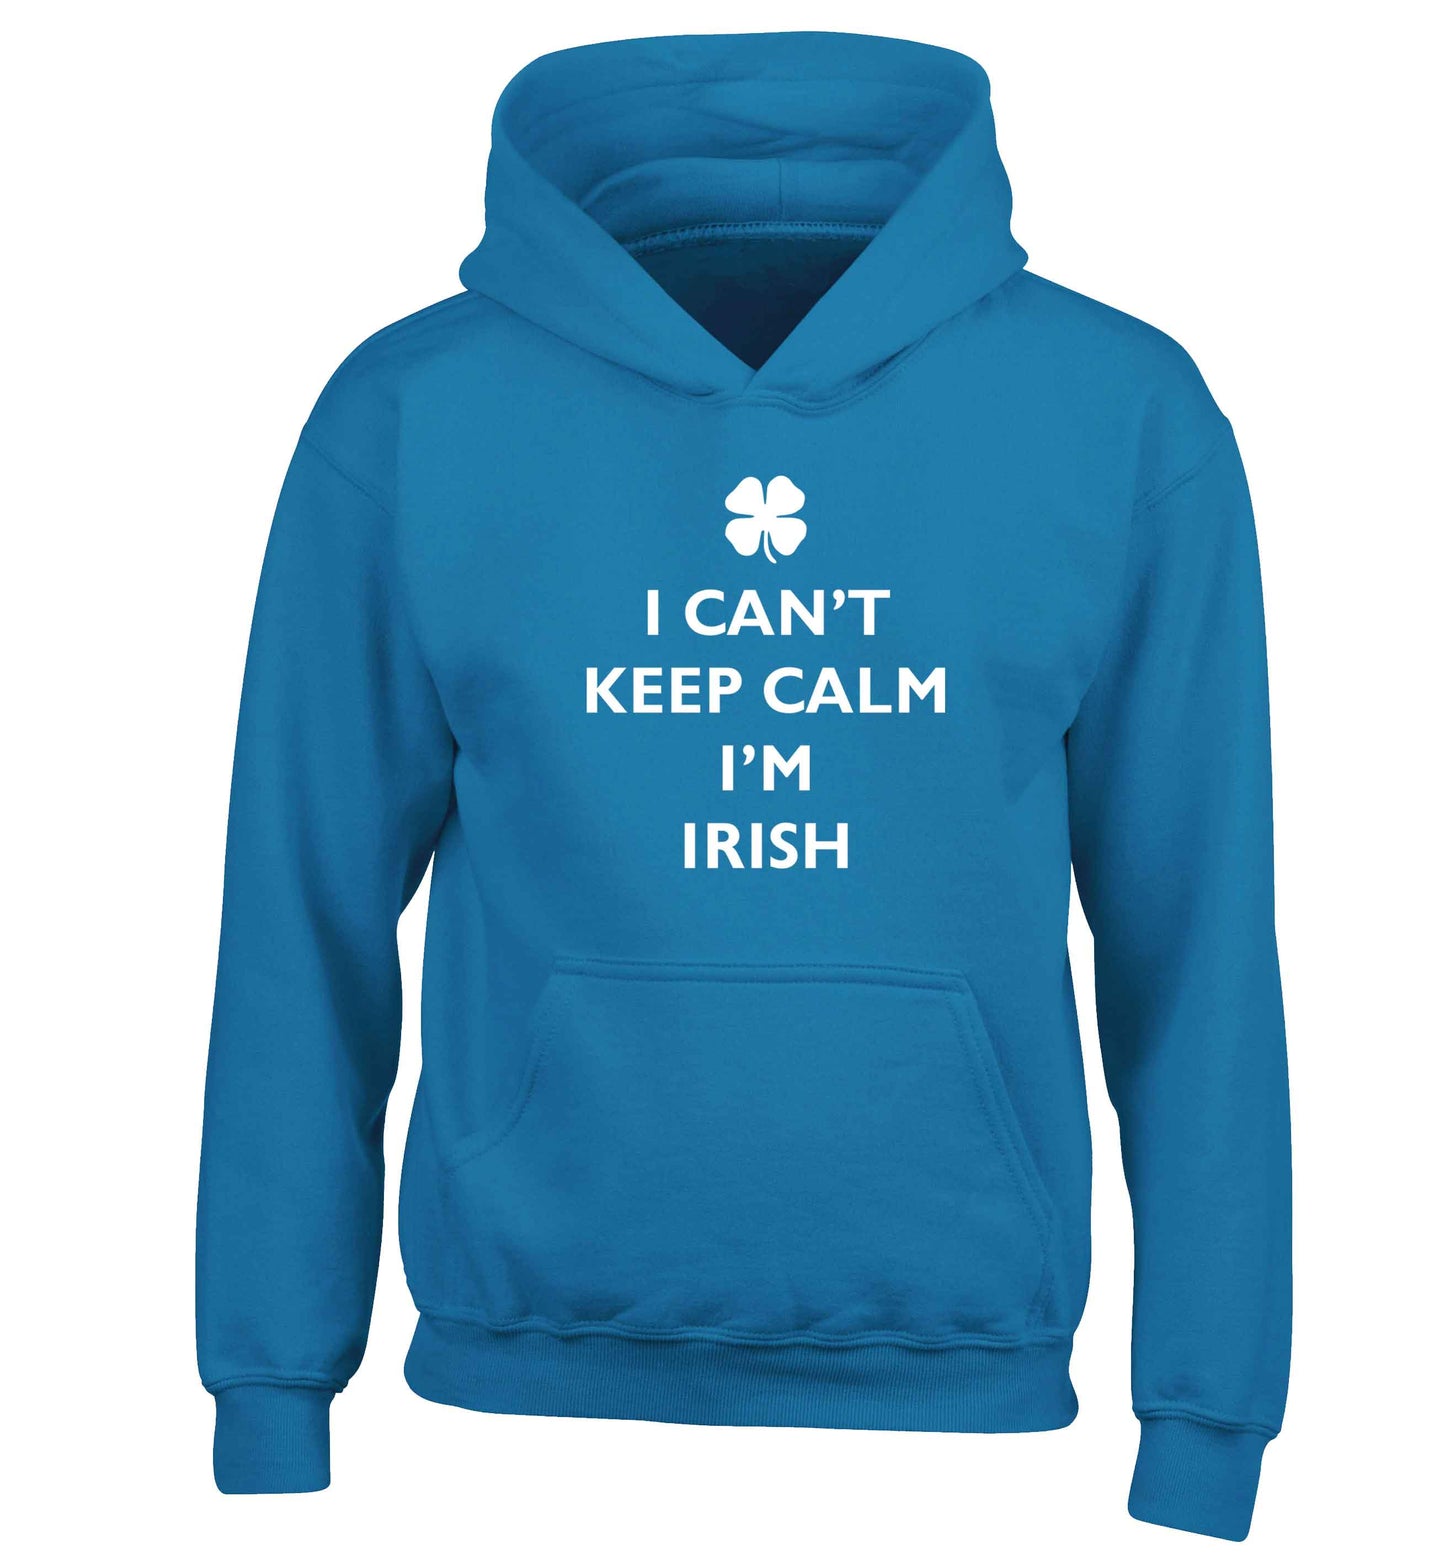 I can't keep calm I'm Irish children's blue hoodie 12-13 Years